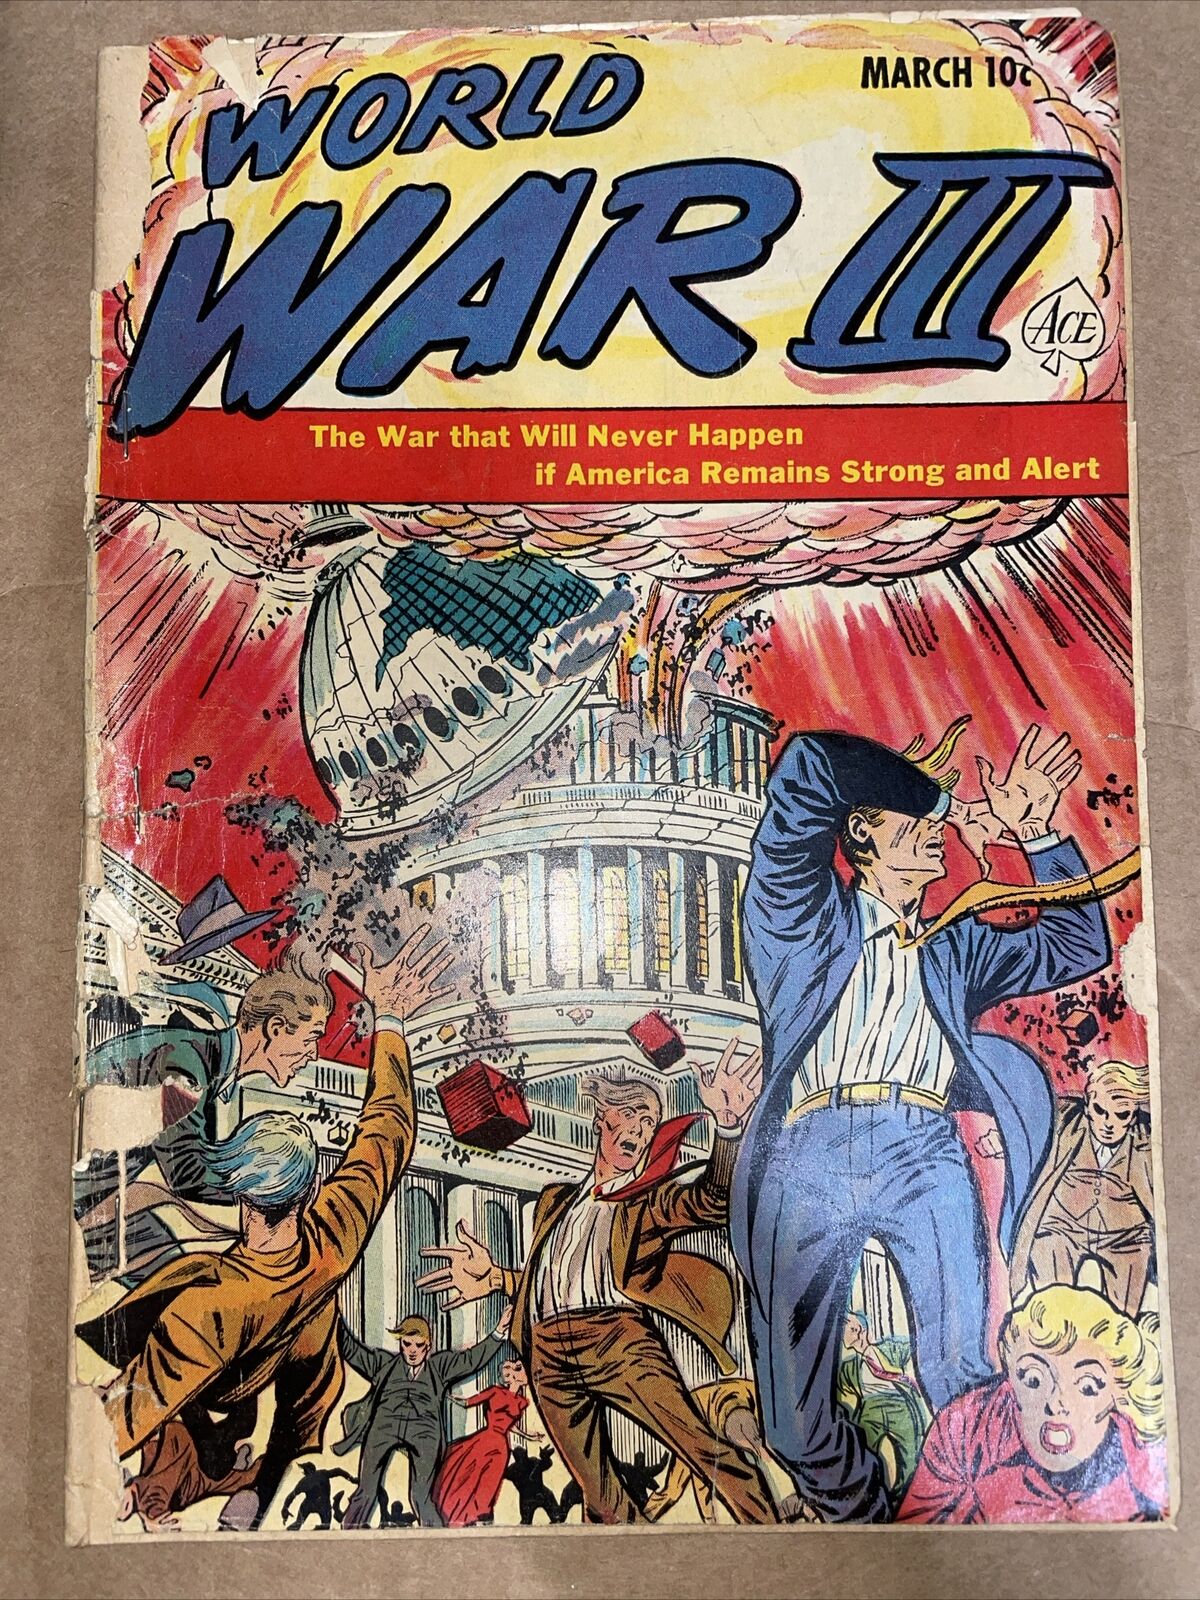 World War III (1952, Ace Periodicals) Rare Book